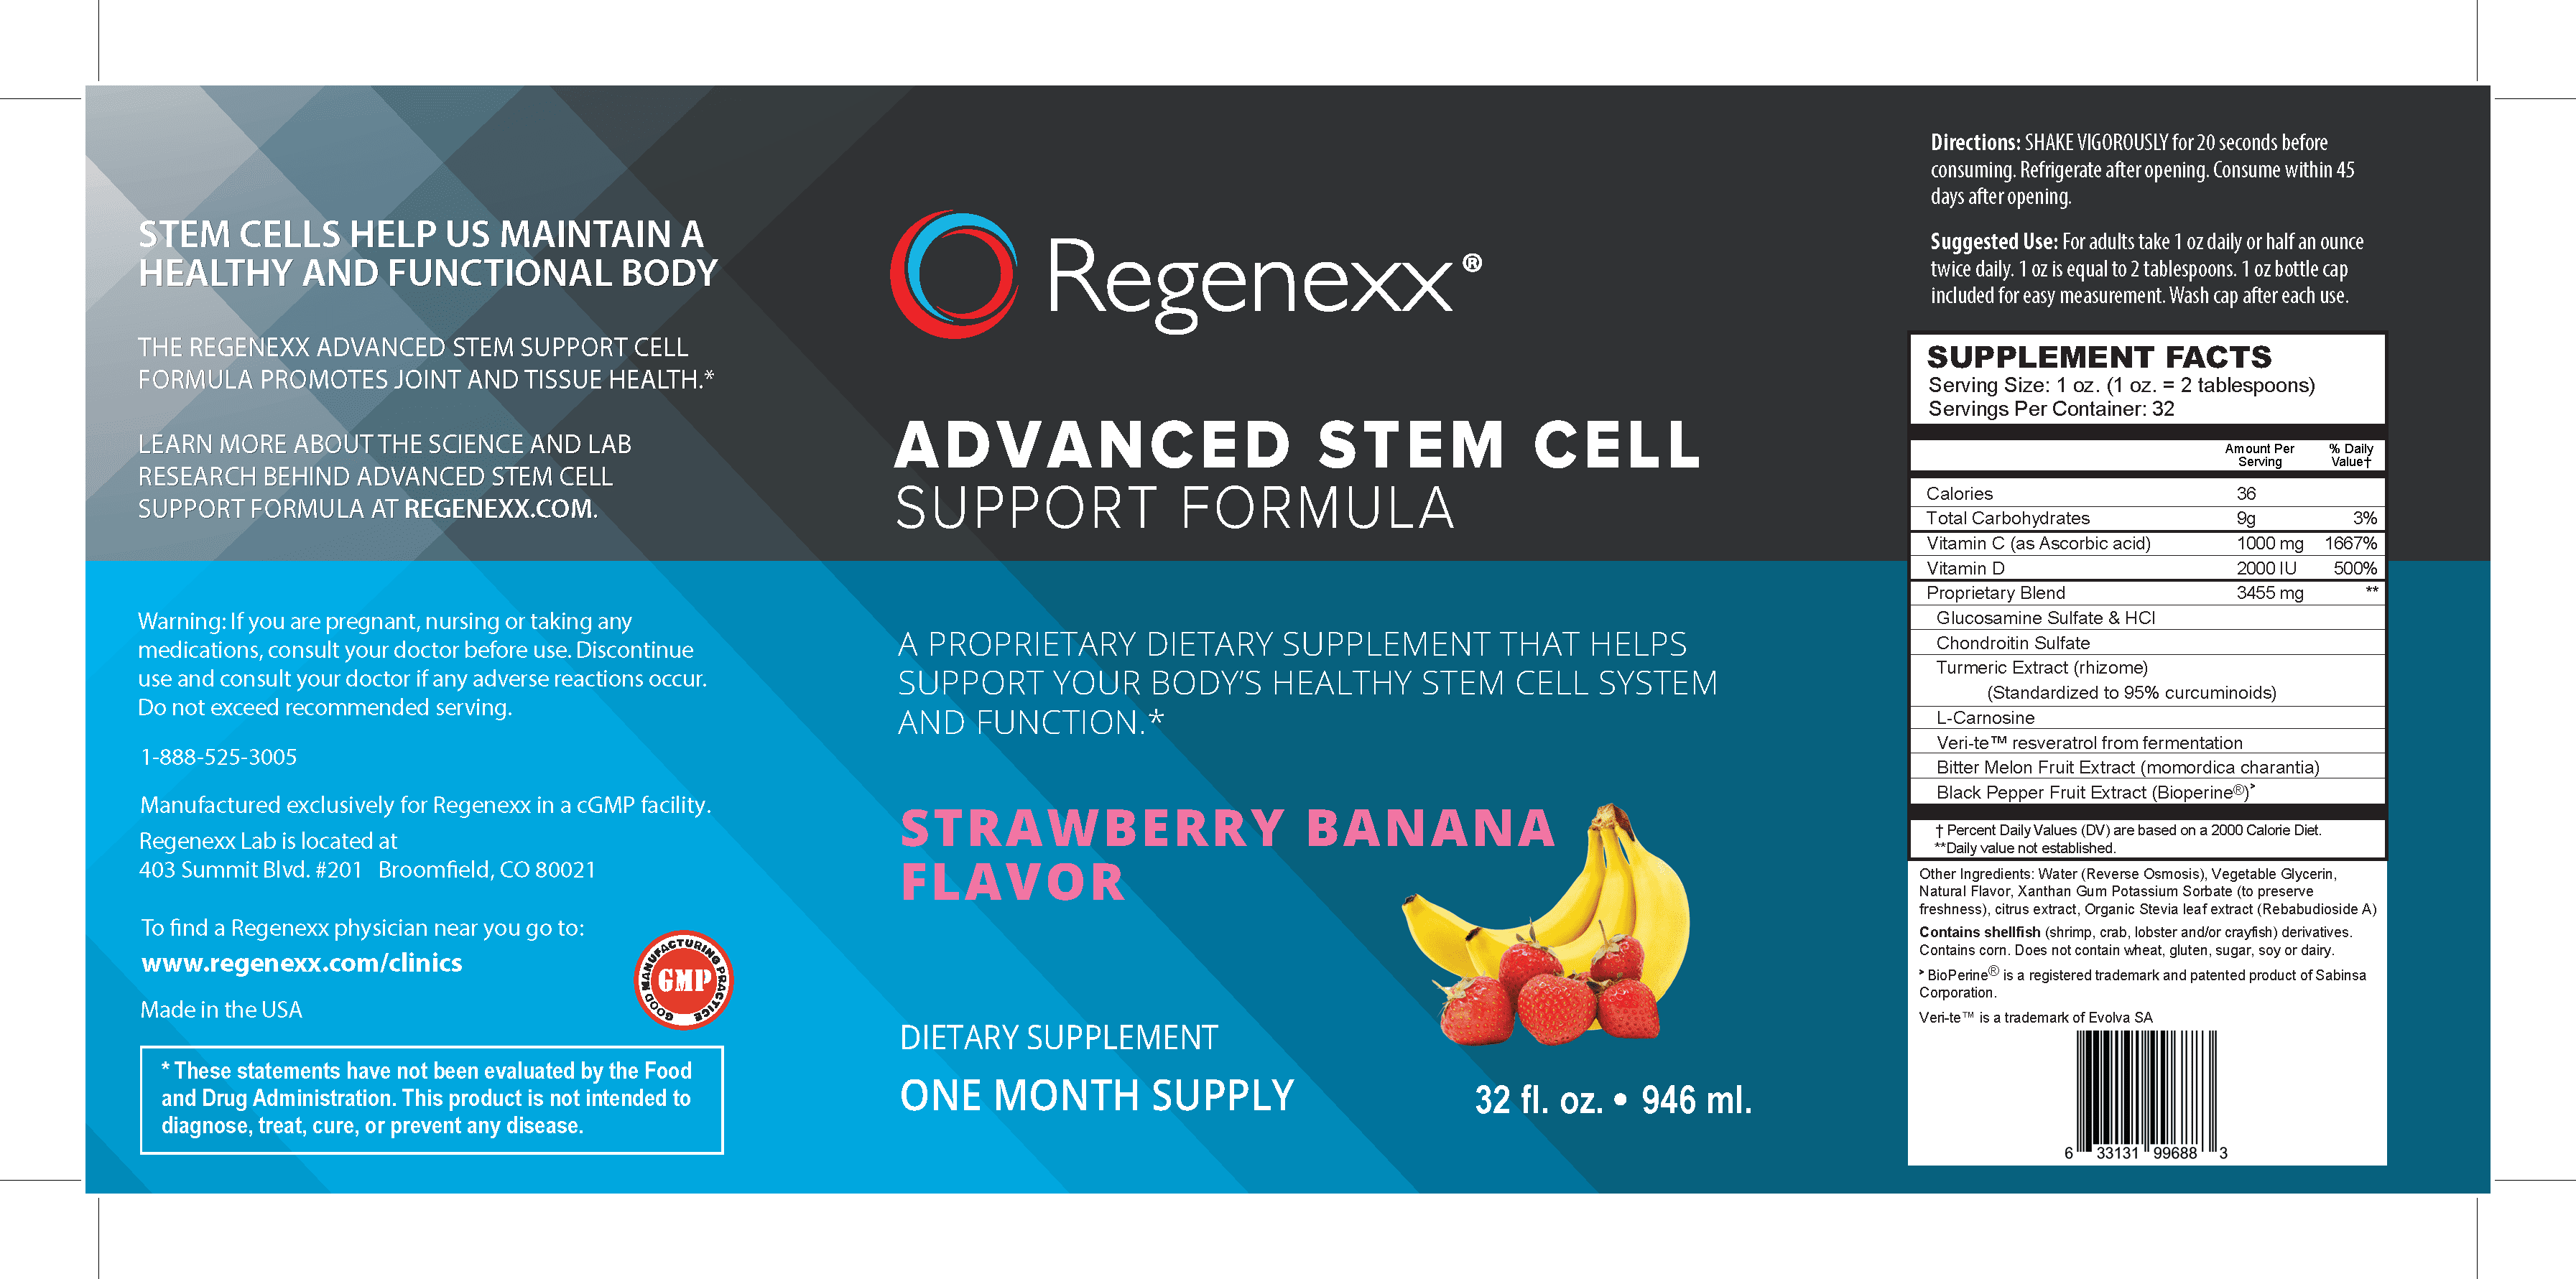 Regenexx Advanced Stem Cell Support Formula, Strawberry flavor Label